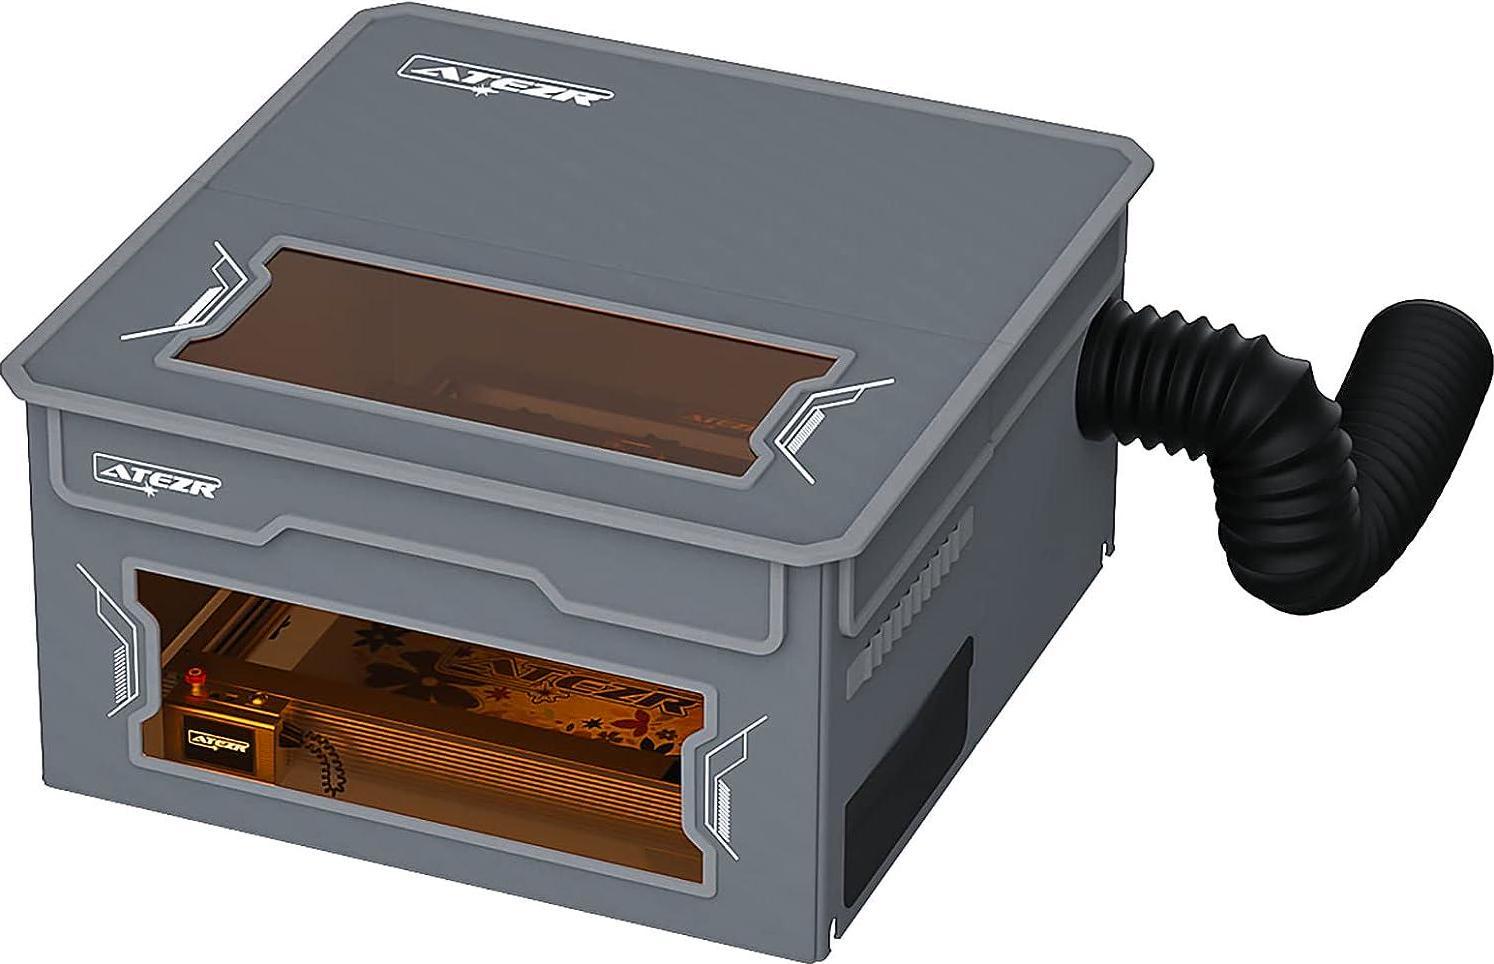 Official SCULPFUN Laser Engraver Dust-Proof Enclosure Smoke